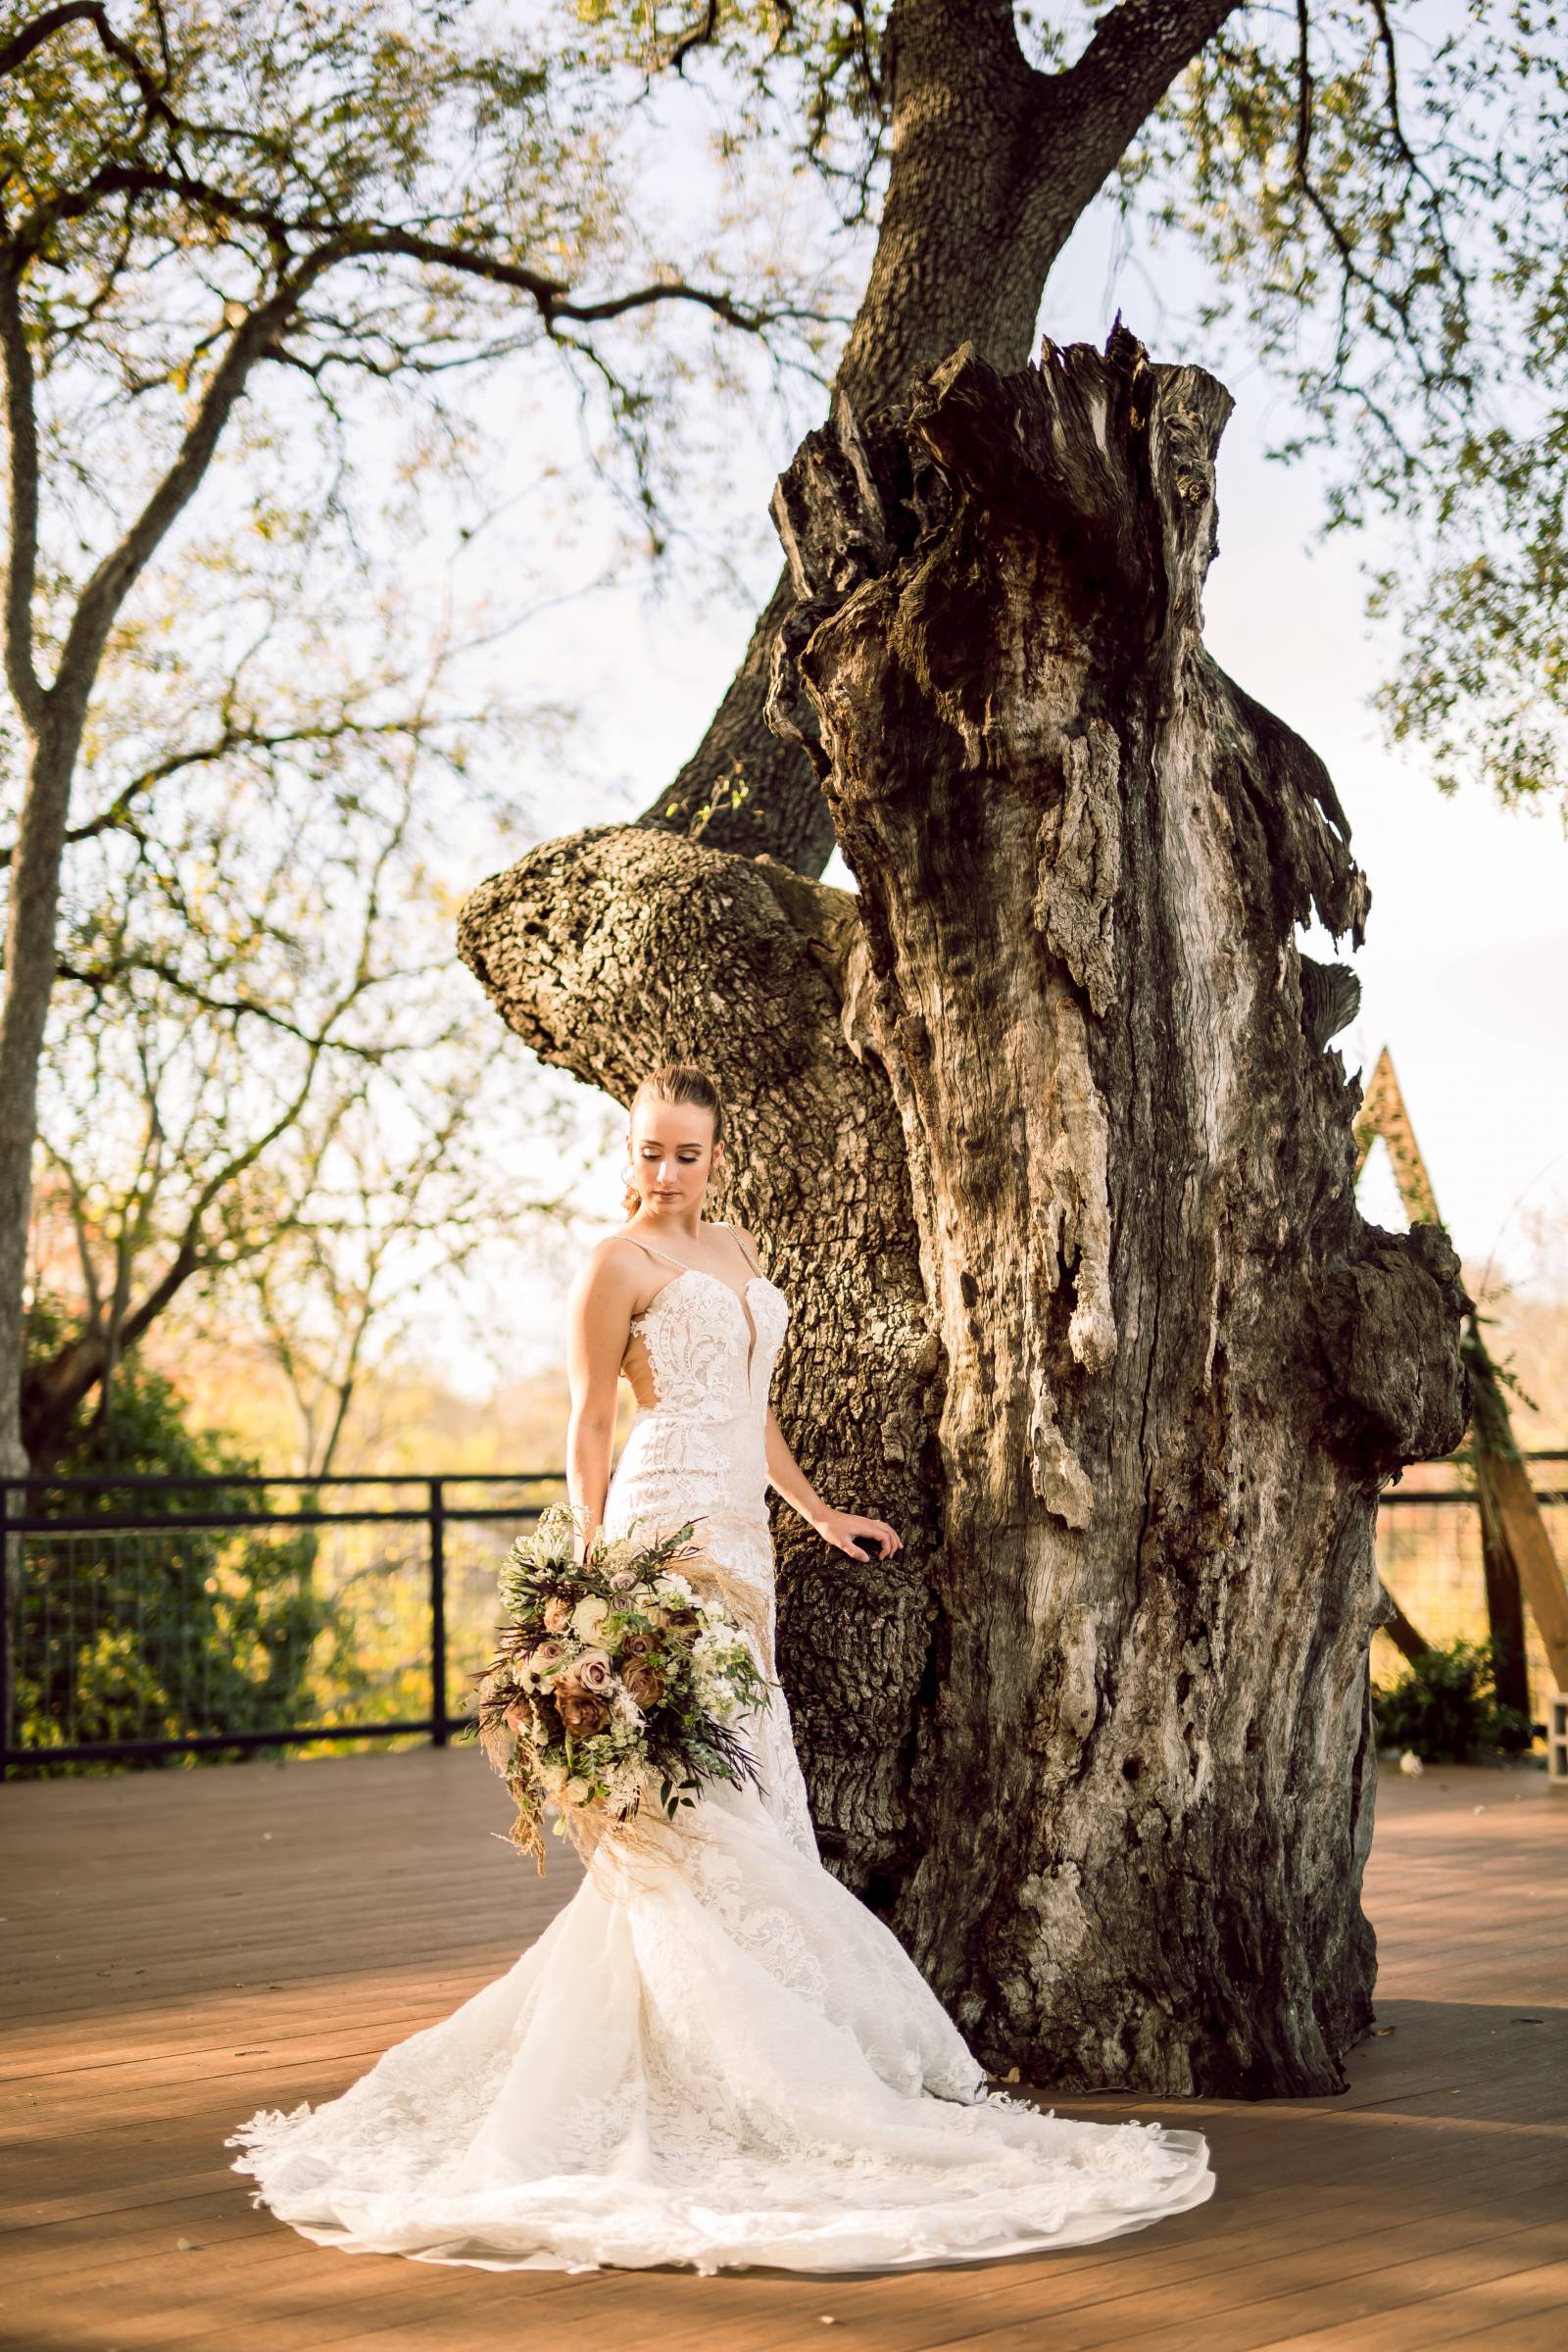 Bridal portrait by a large tree